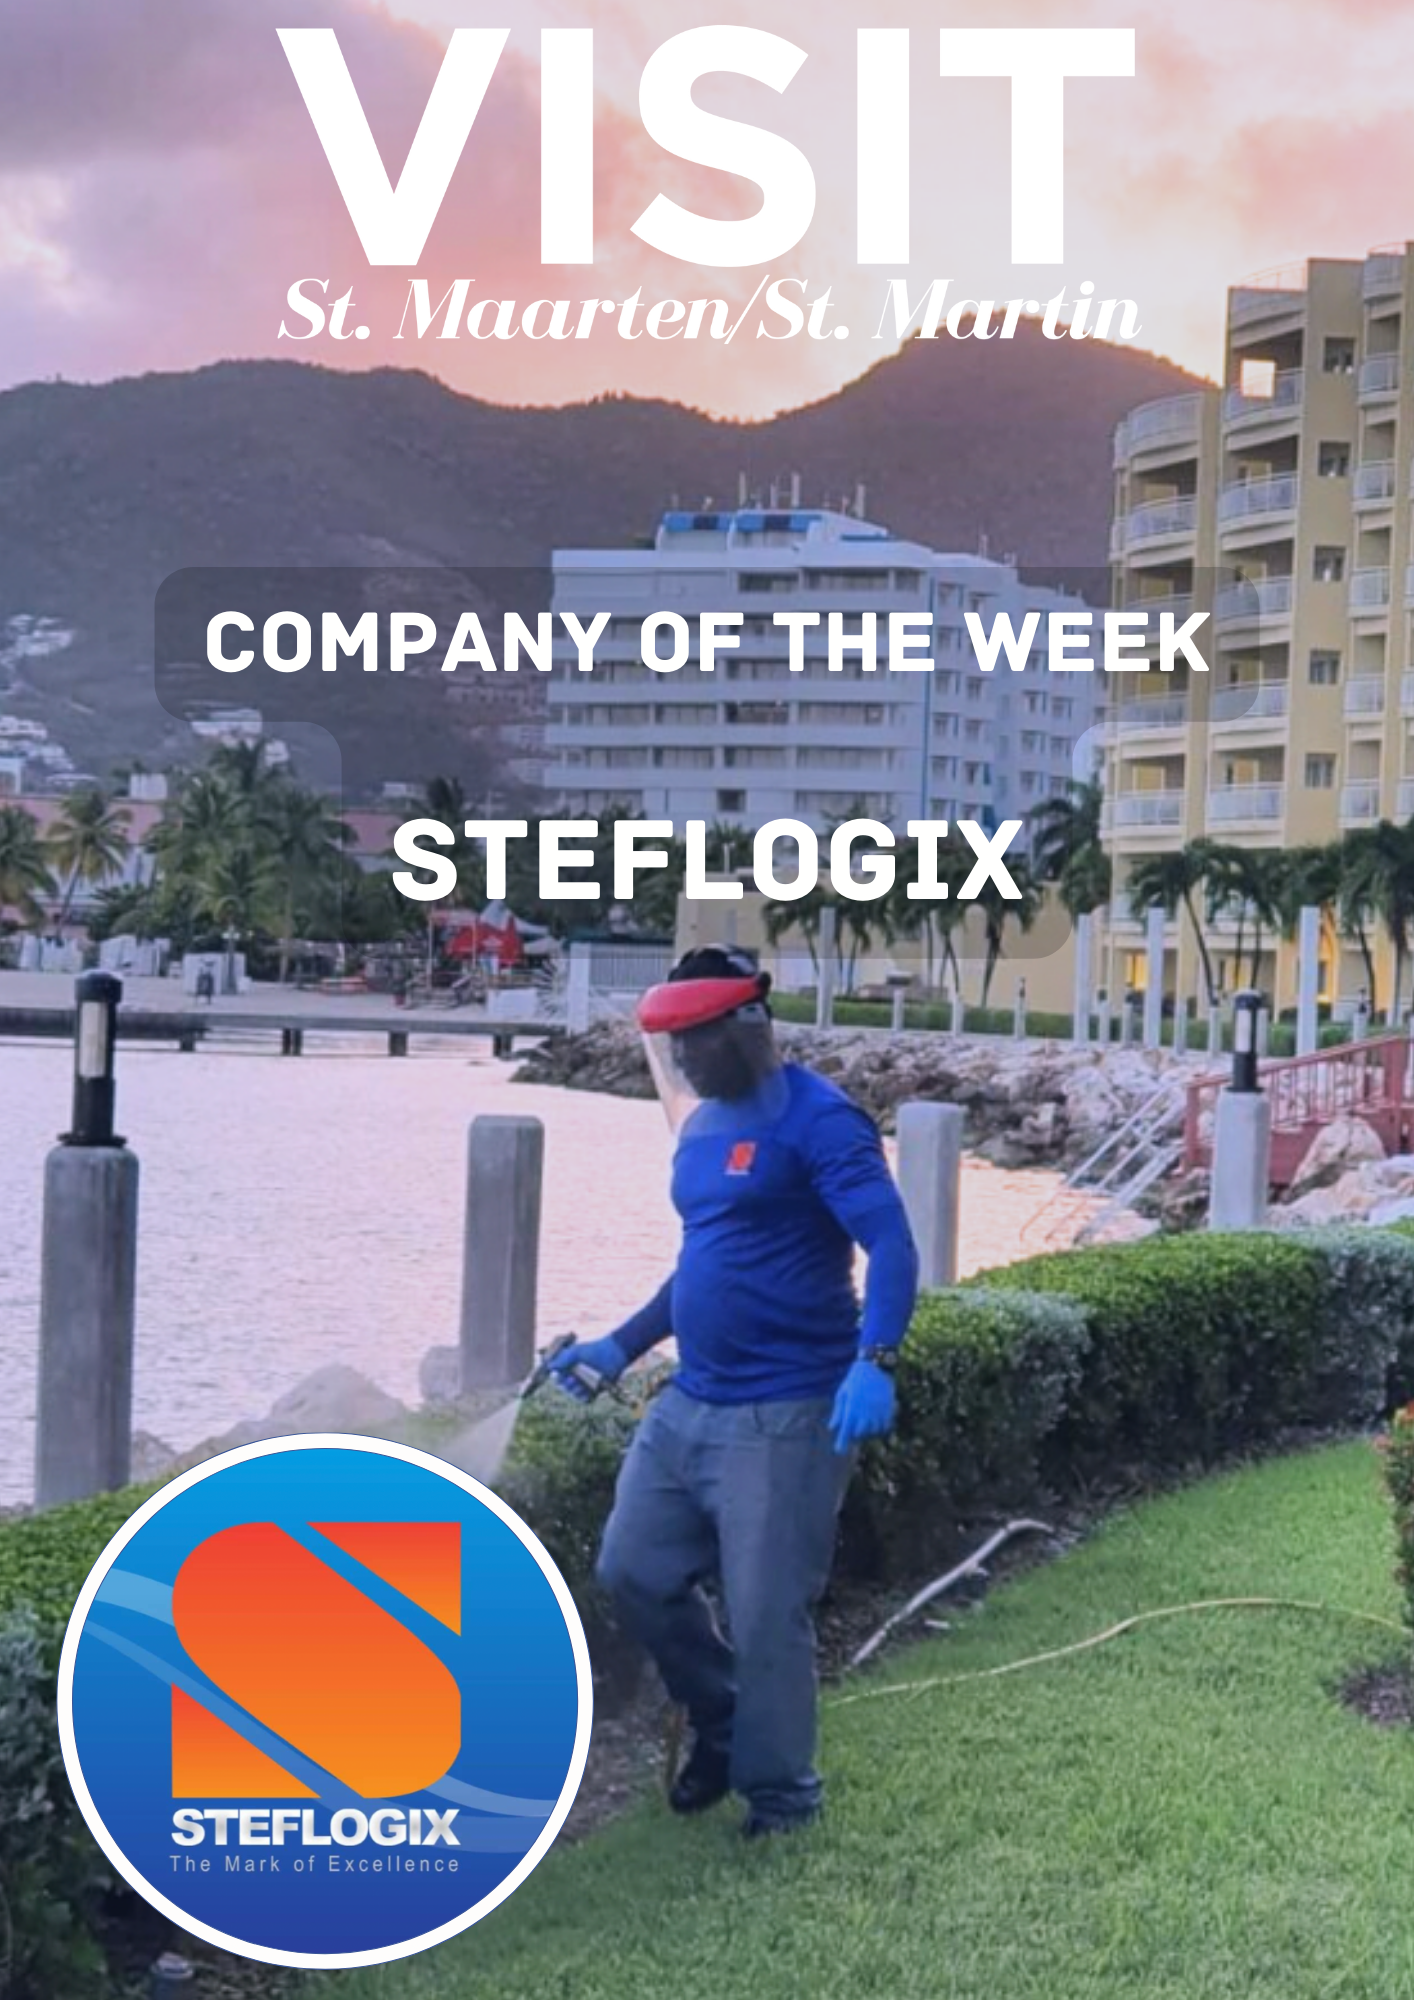 St maarten company of the week is Steflogix